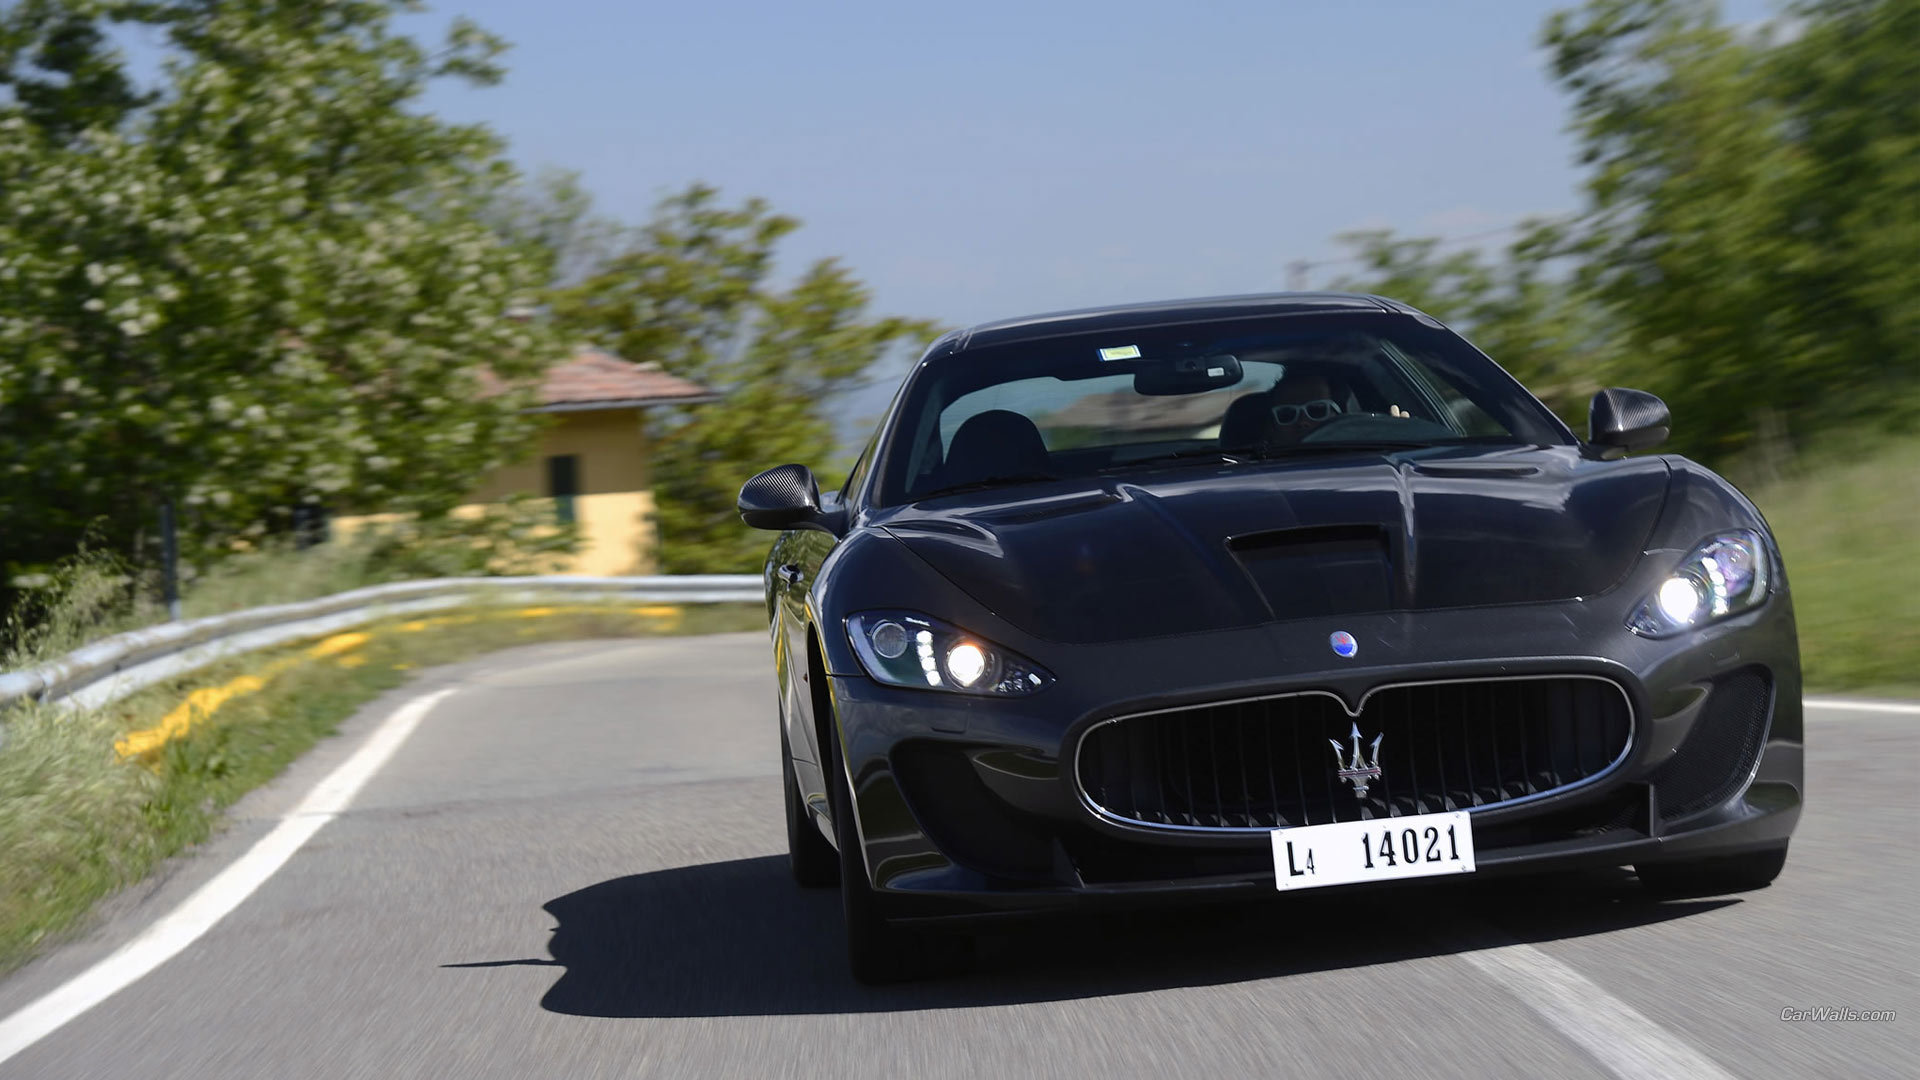 Awesome Maserati GranTurismo free background ID:11037 for 1080p computer